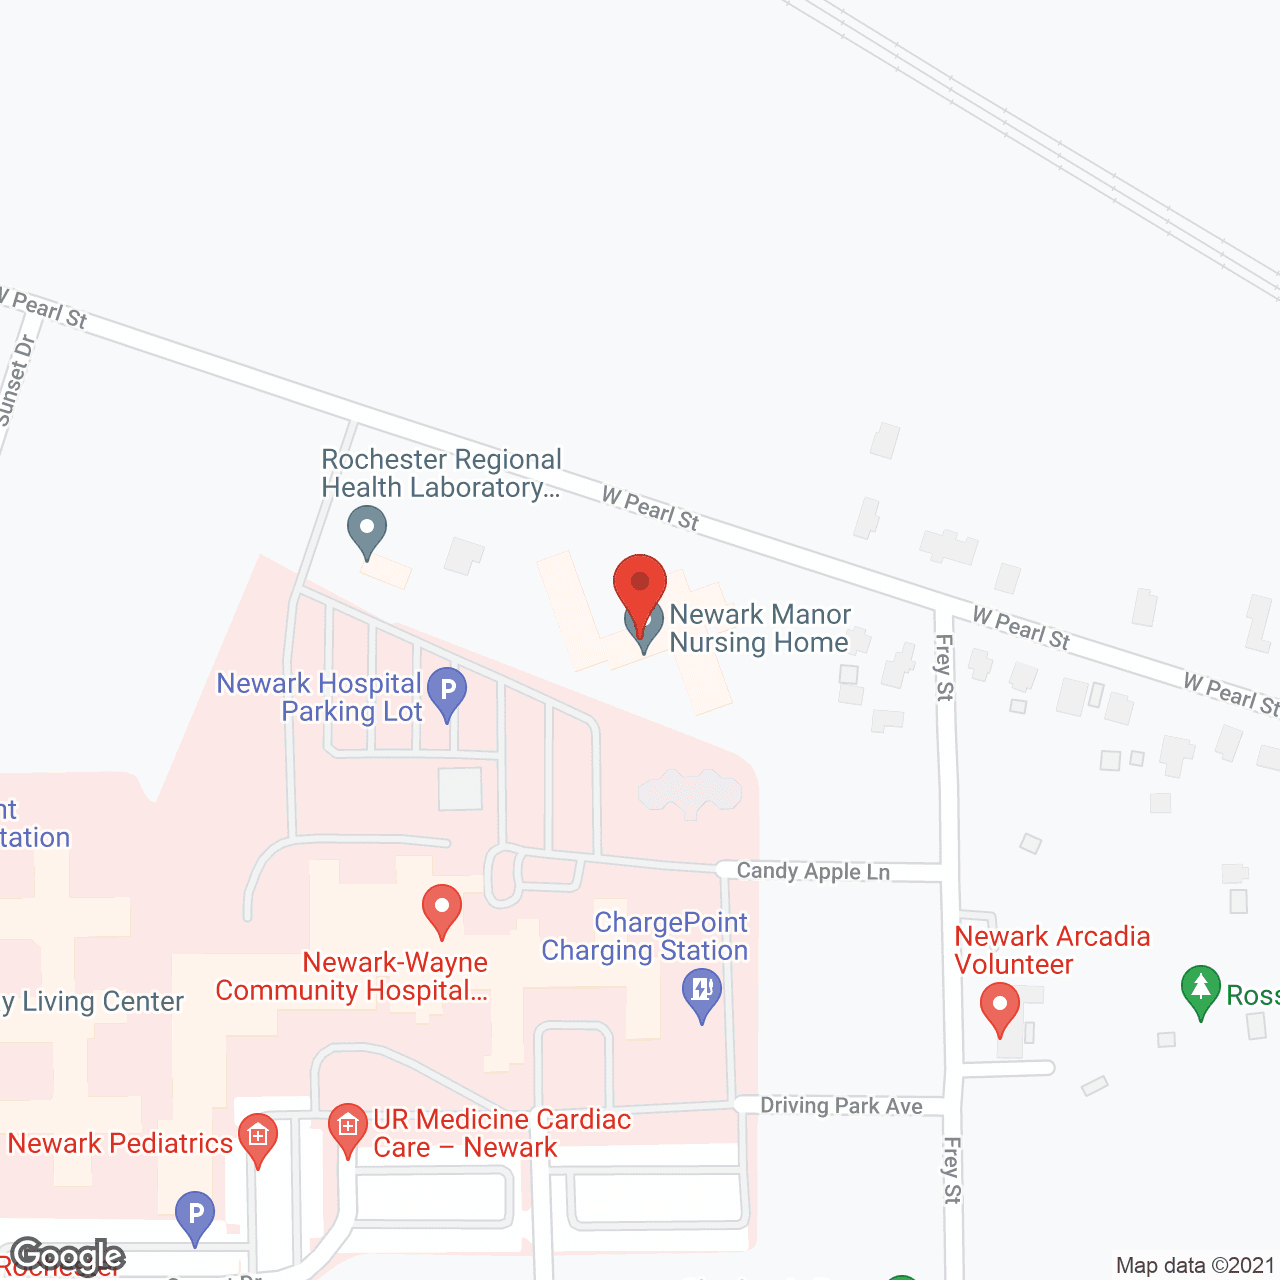 Newark Manor Nursing Home in google map